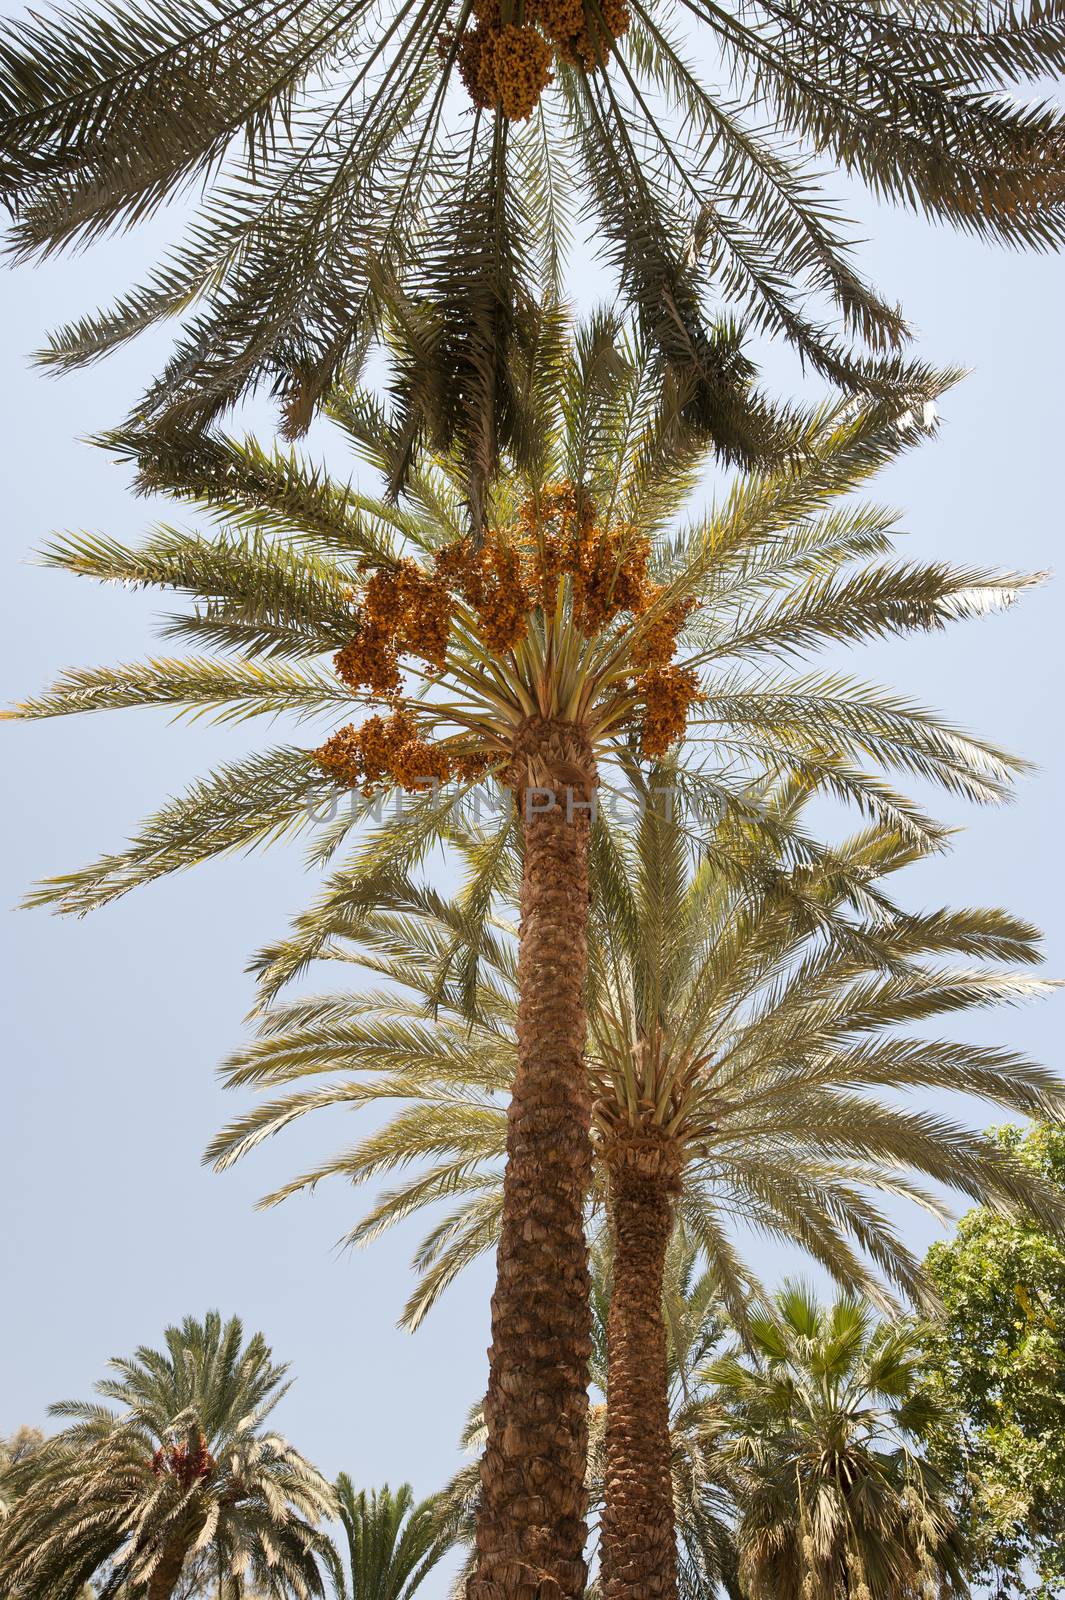 Date palm trees by paulvinten